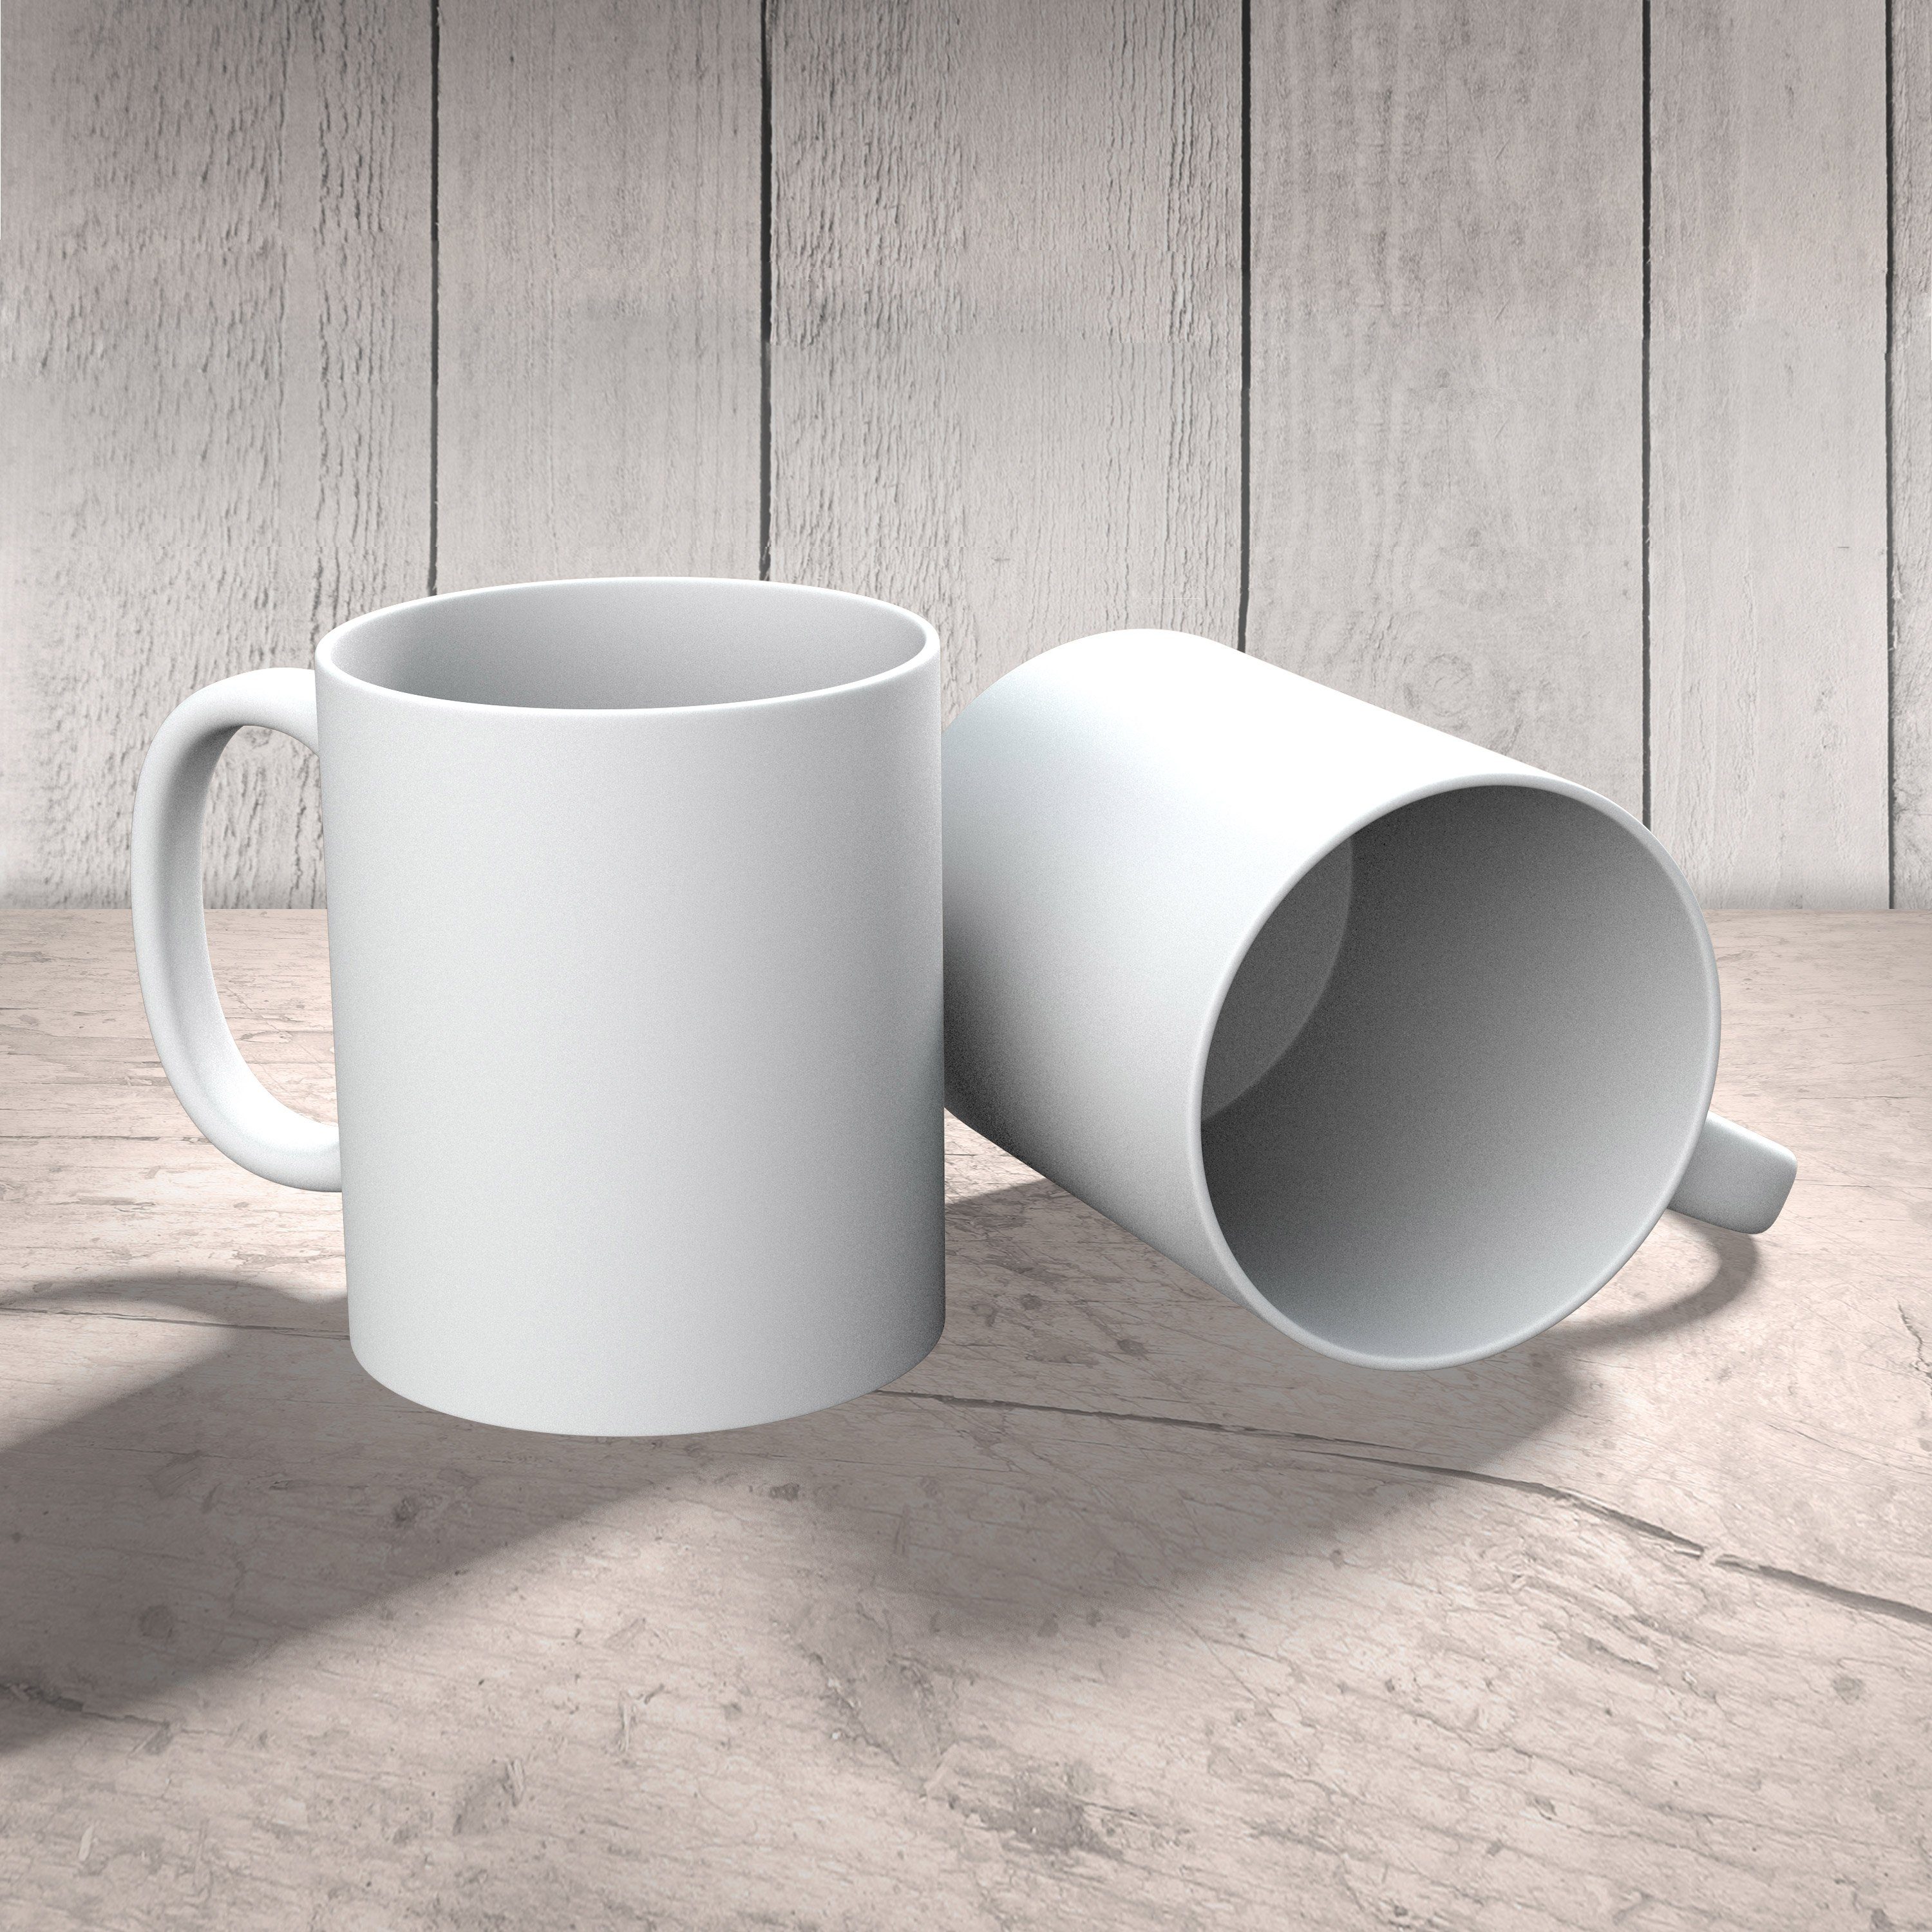 Mr. & Mrs. Panda Keramik Teetasse, Geschenk, der Tasse Welt - Kaffeetasse, Weiß - Ka, Tischler Bester